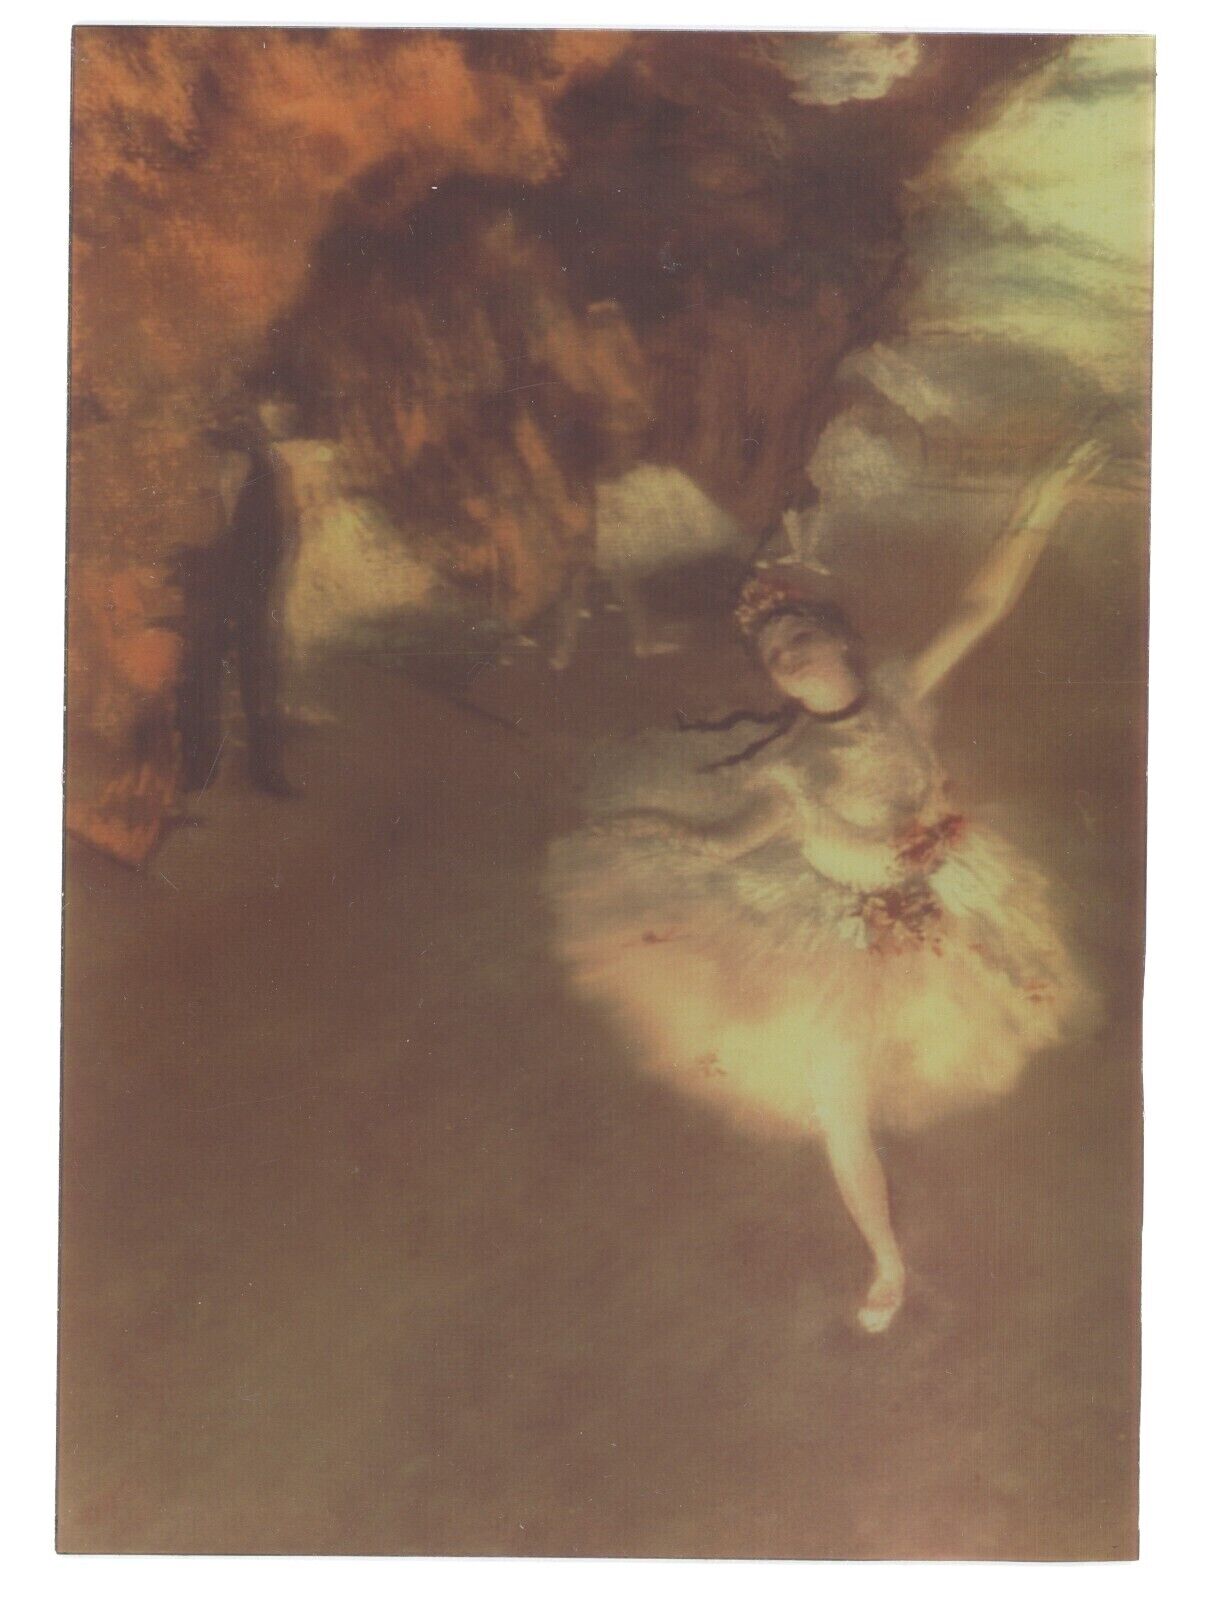 The Star or Dancer on the Stage Circa 1876-77 3-D Art Photo Reprint Edgar Degas